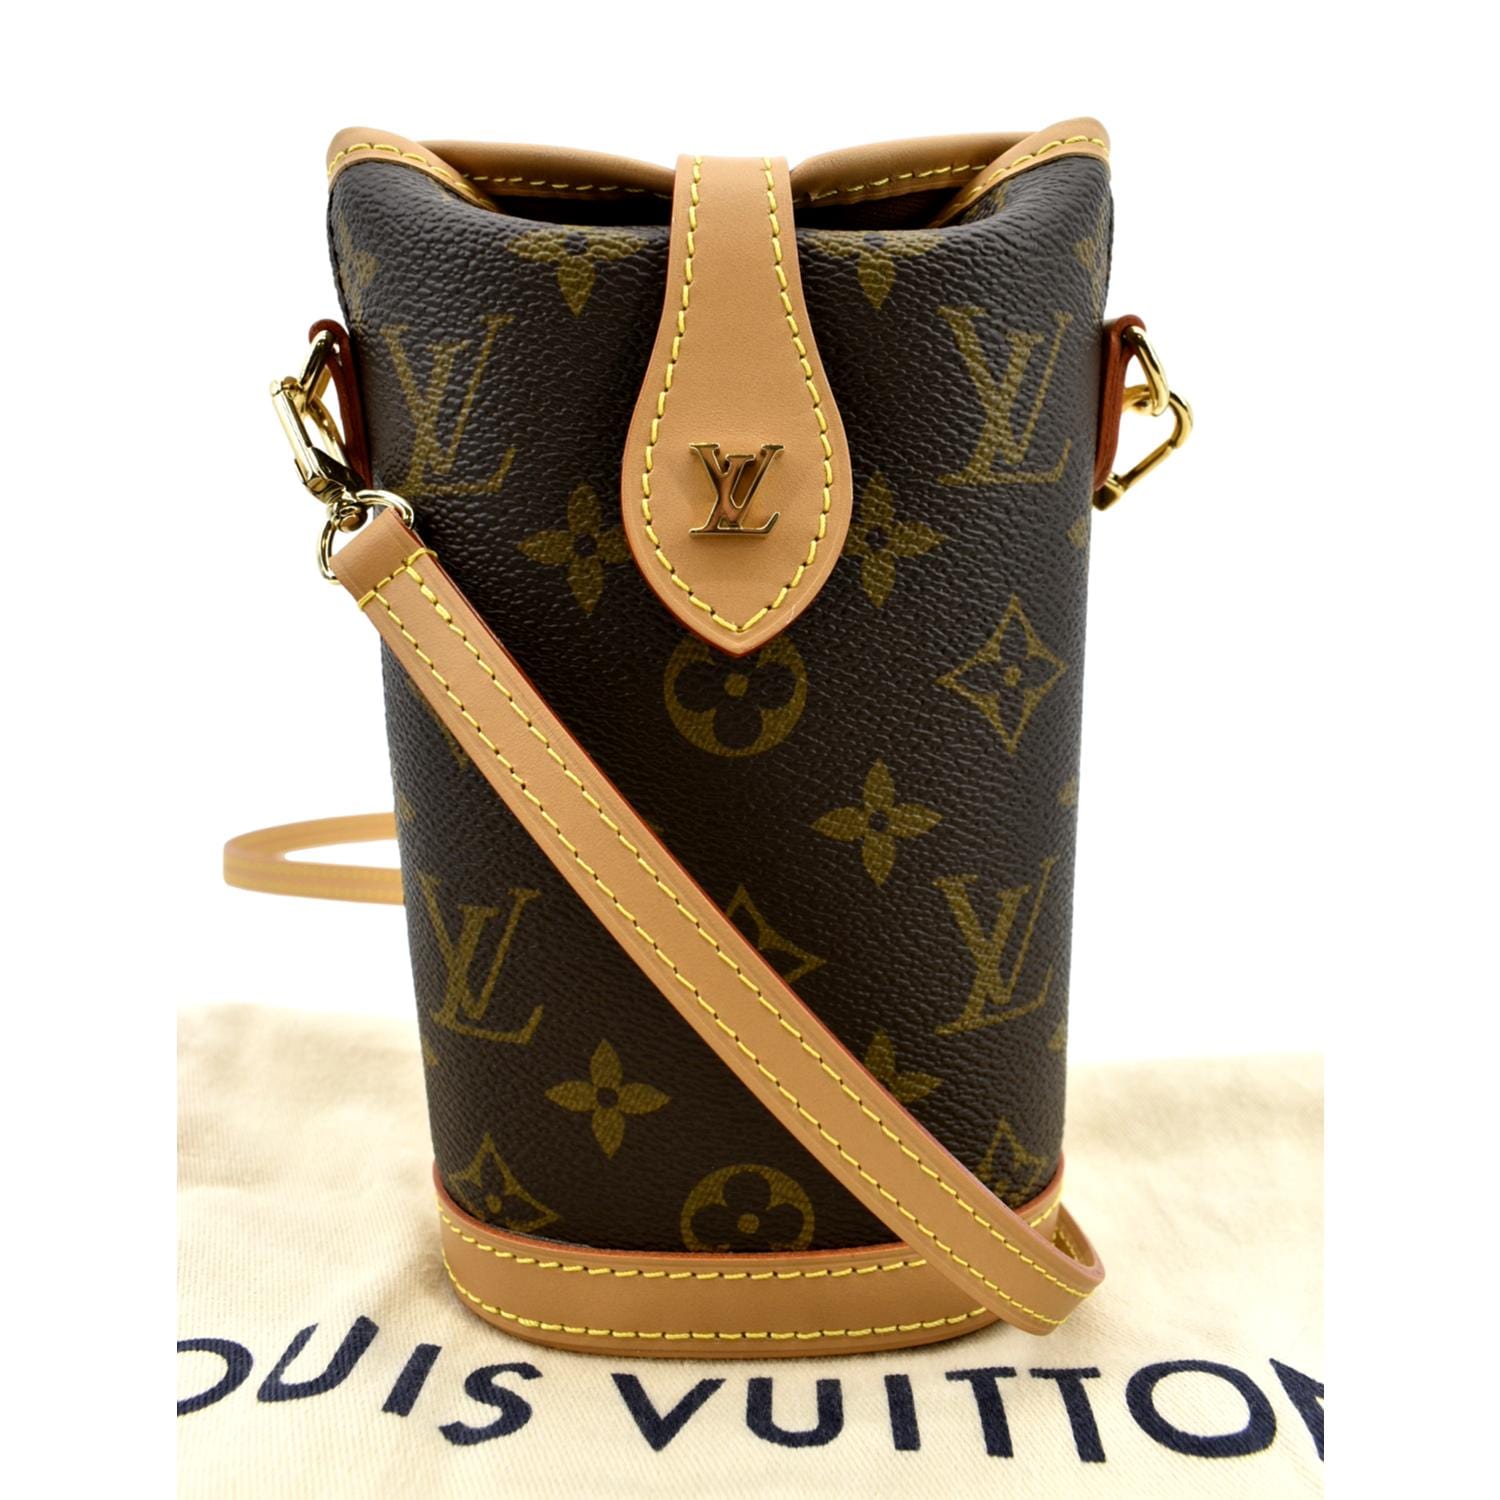 Louis Vuitton Dust Bag Fold Over